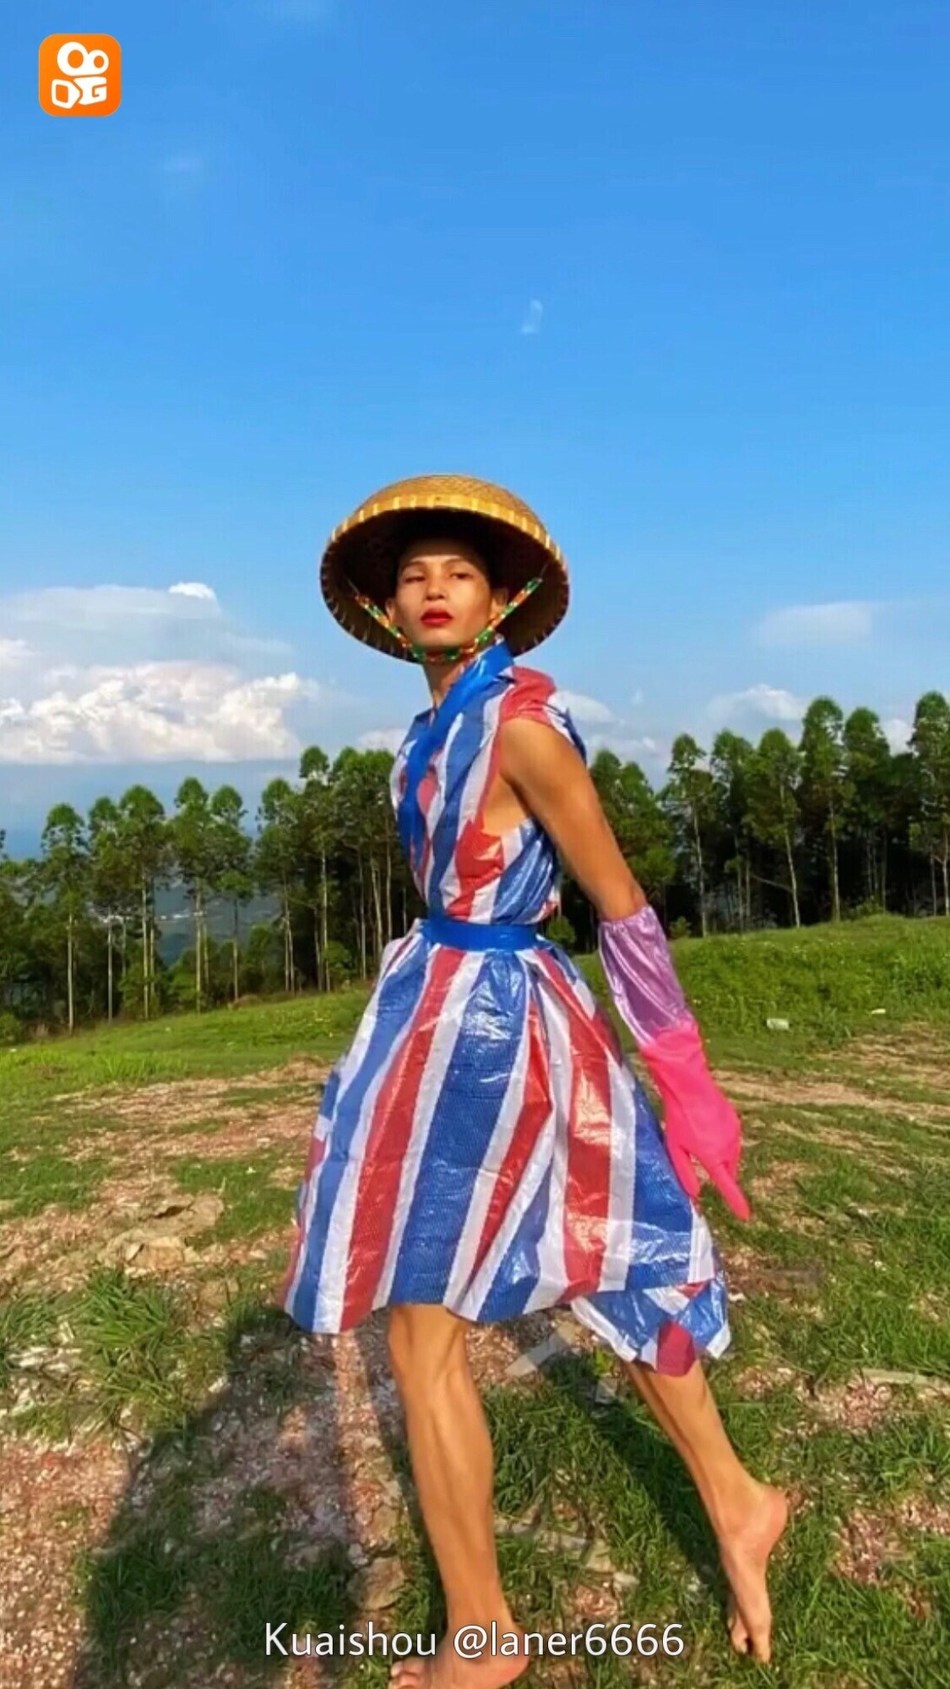 Meet the Village Supermodel on Kuaishou: from China's countryside to international runways